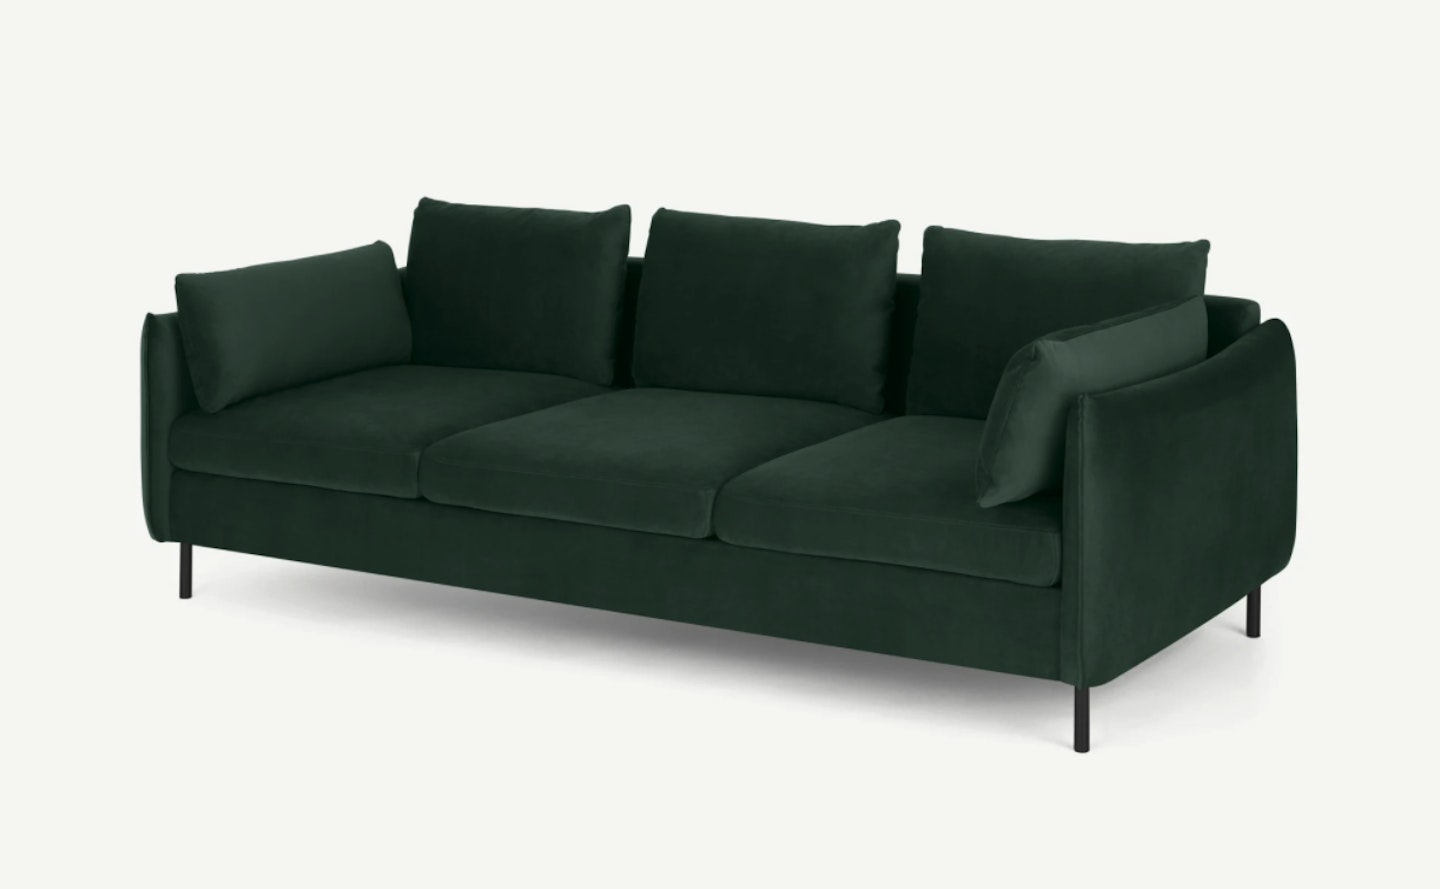 MADE, Vento 3 Seater Sofa, Autumn Green Velvet, £975